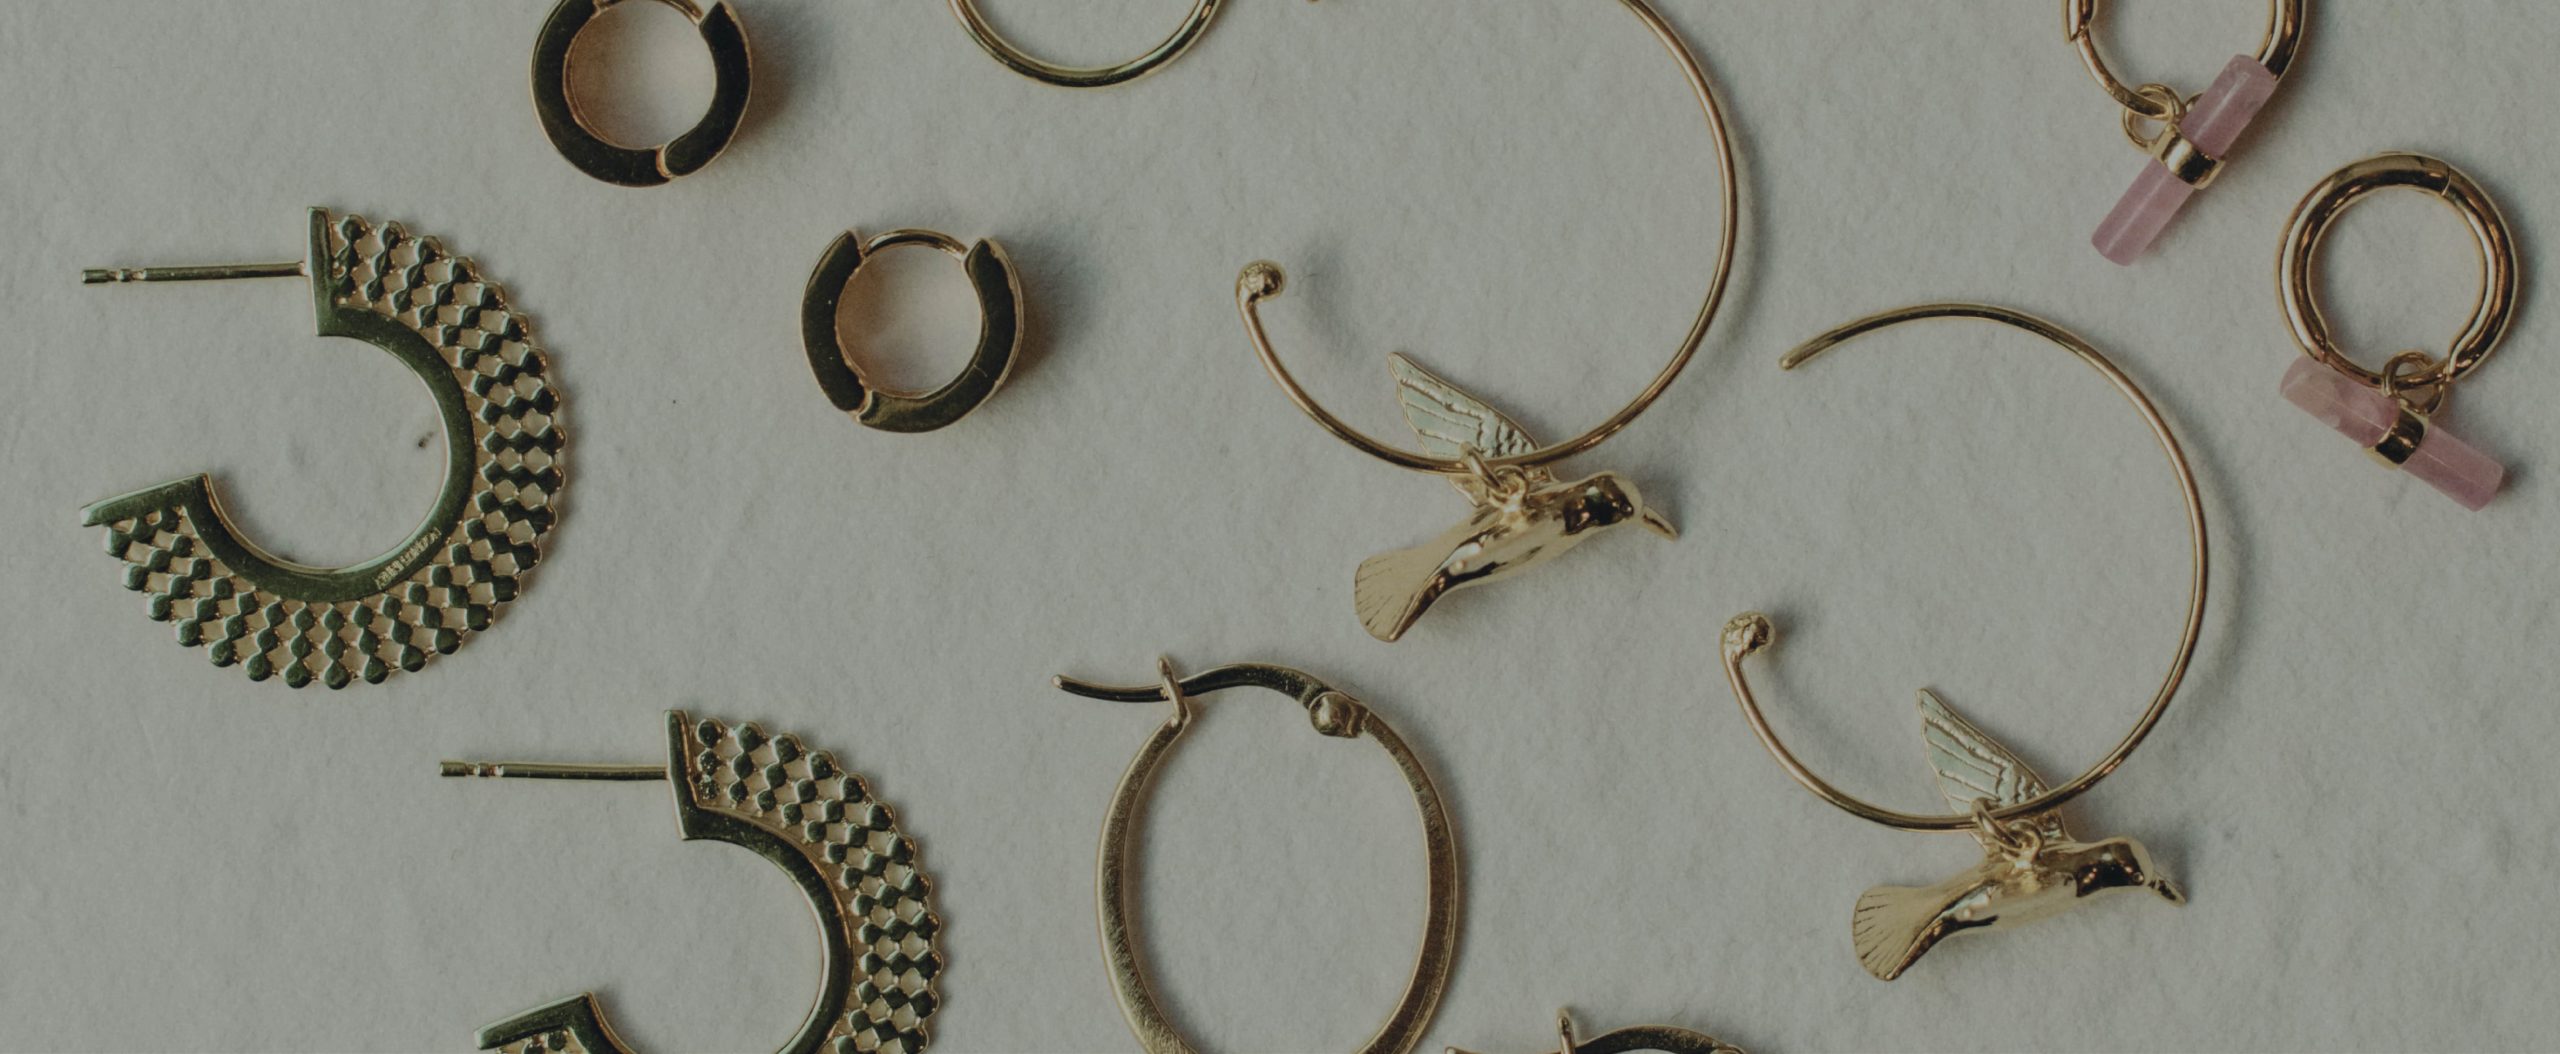 Silver and Gold Hoop Earrings at Silverado Jewellery